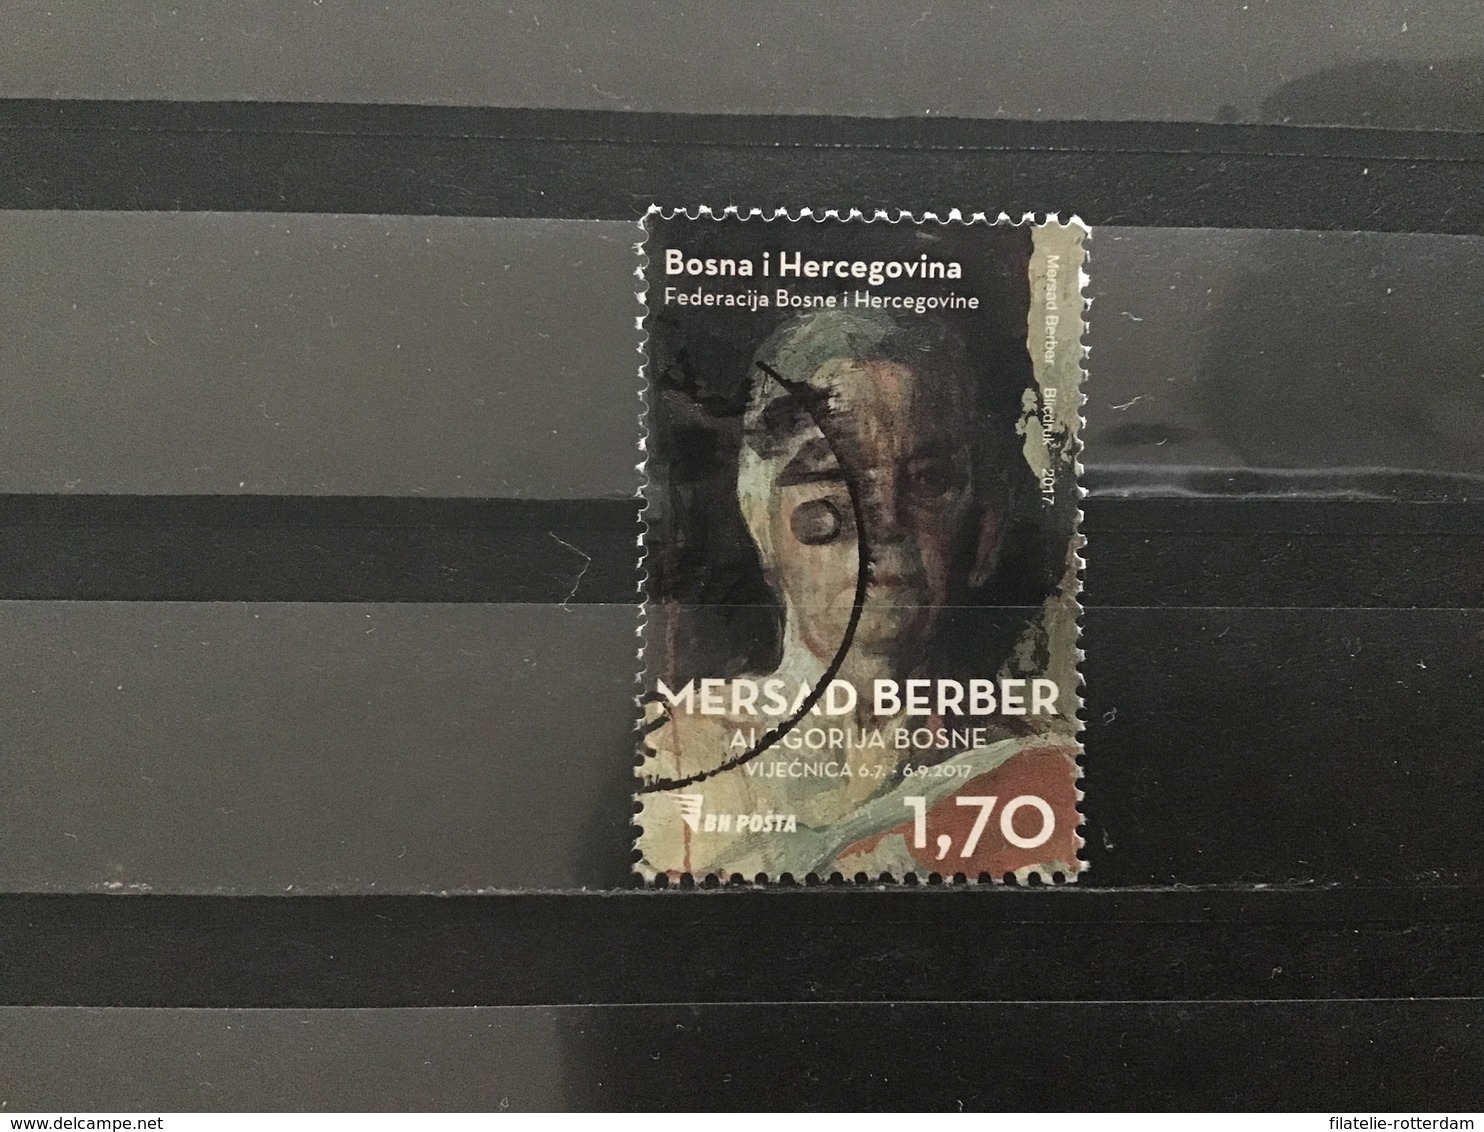 Bosnië & Herzegovina / Bosnia - Mersad Berber (1.70) 2017 - Bosnia Herzegovina